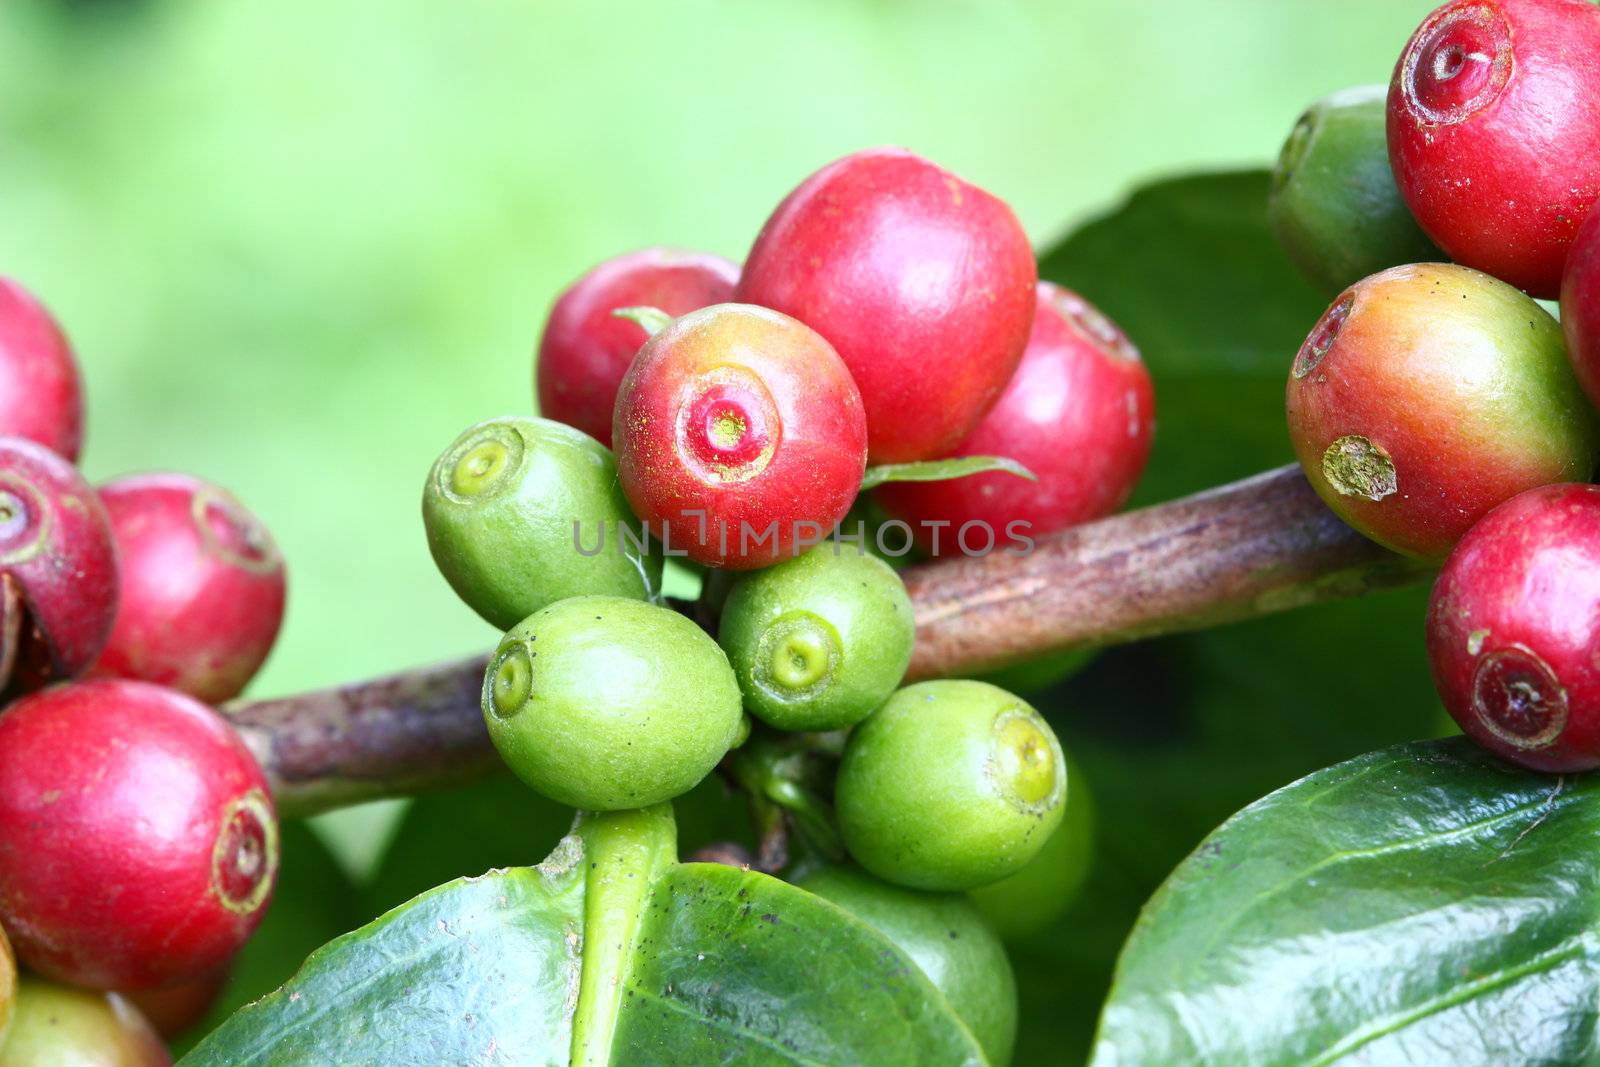 Coffee tree with ripe berries on farm by bajita111122